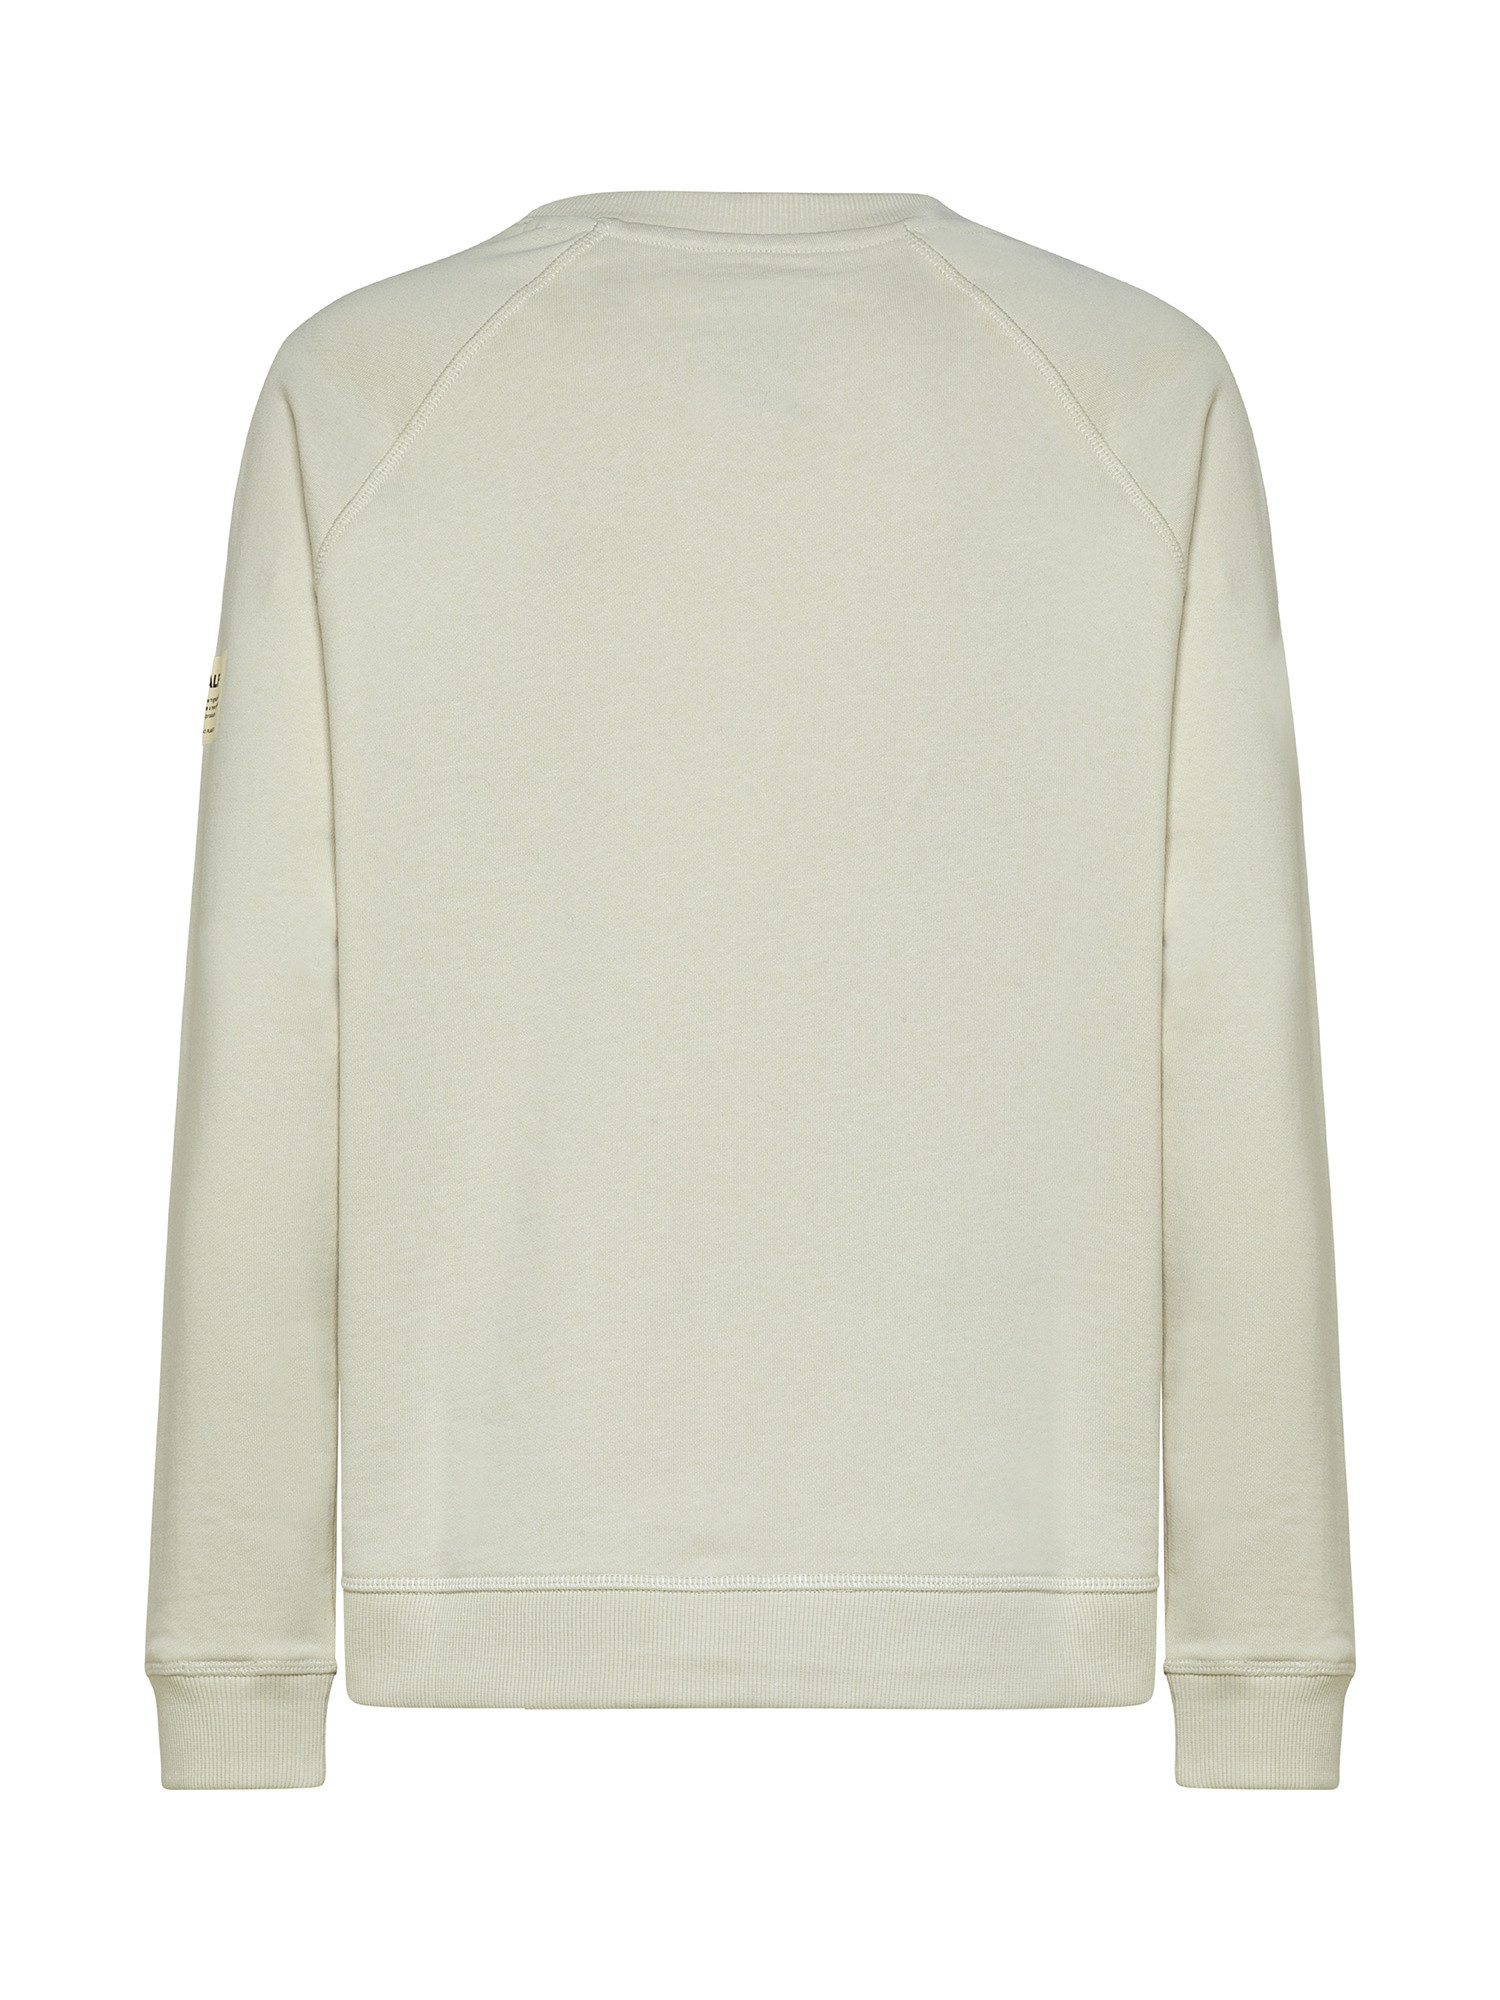 Ecoalf - Sirah sweatshirt with print, White, large image number 1